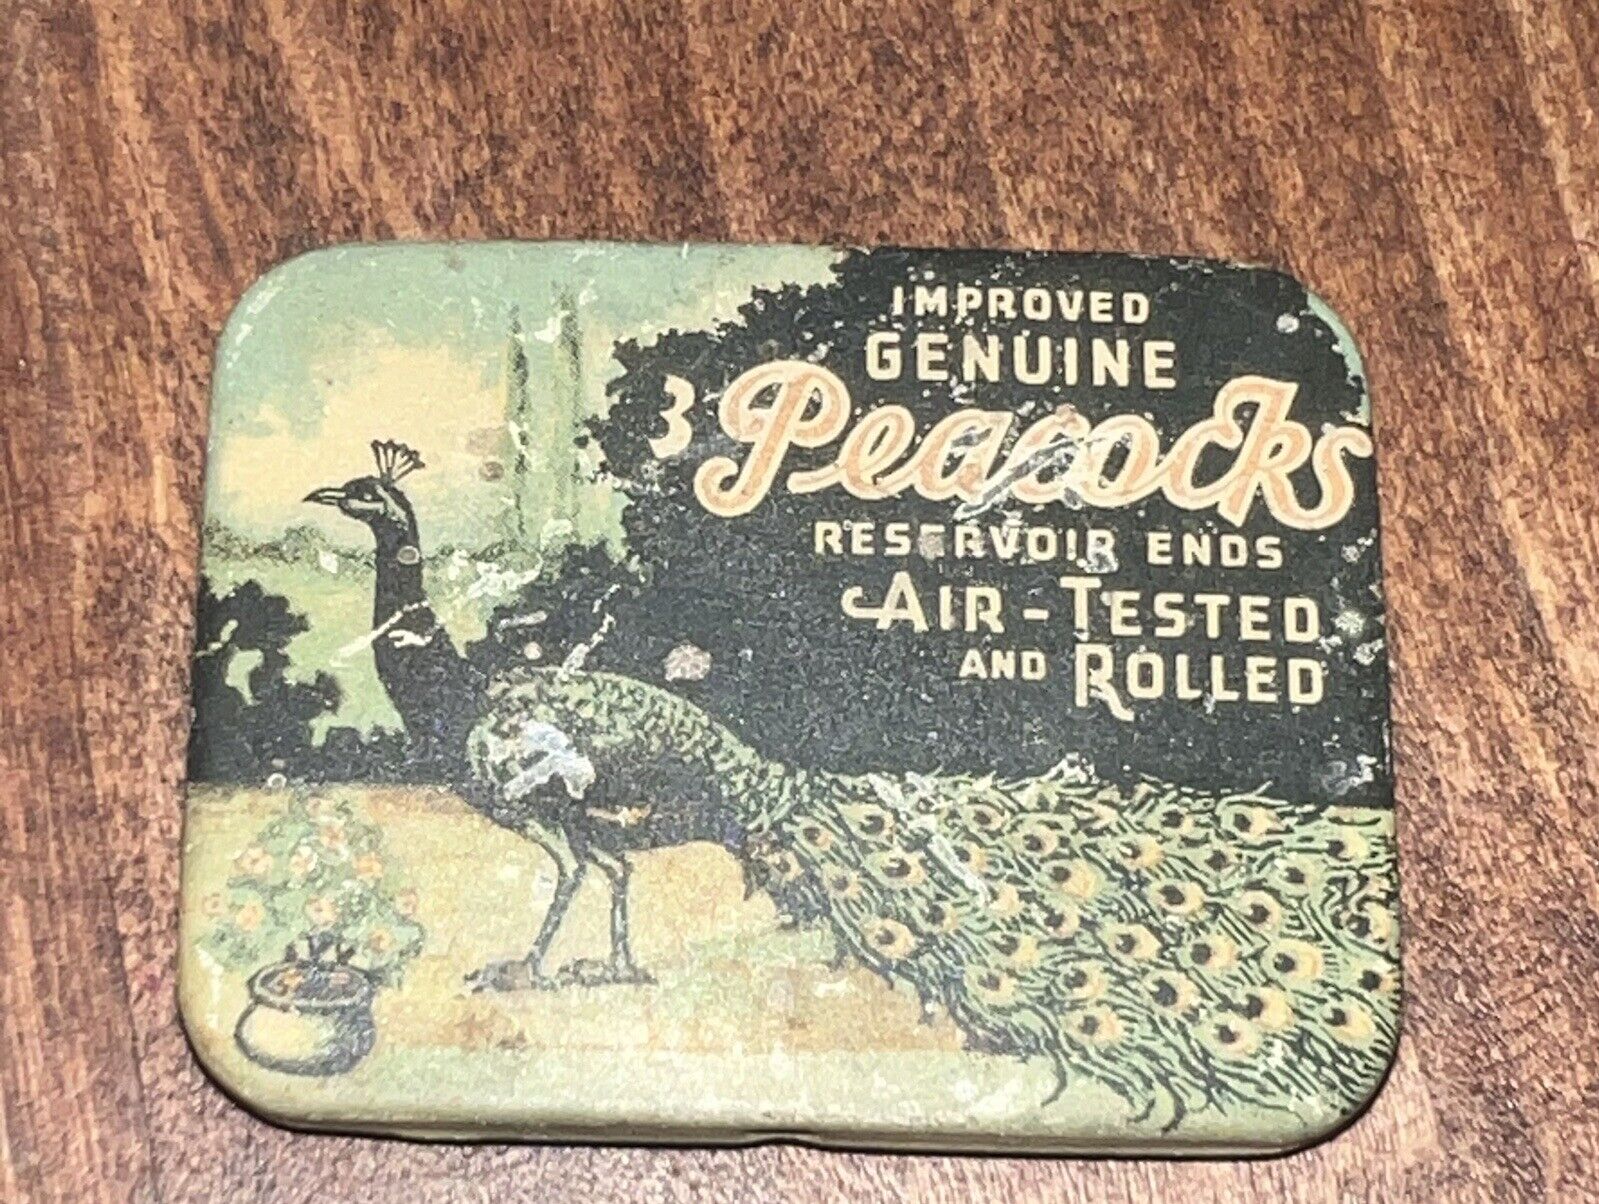 Vintage Dean’s Peacocks Reservoir Ends Condom Tin